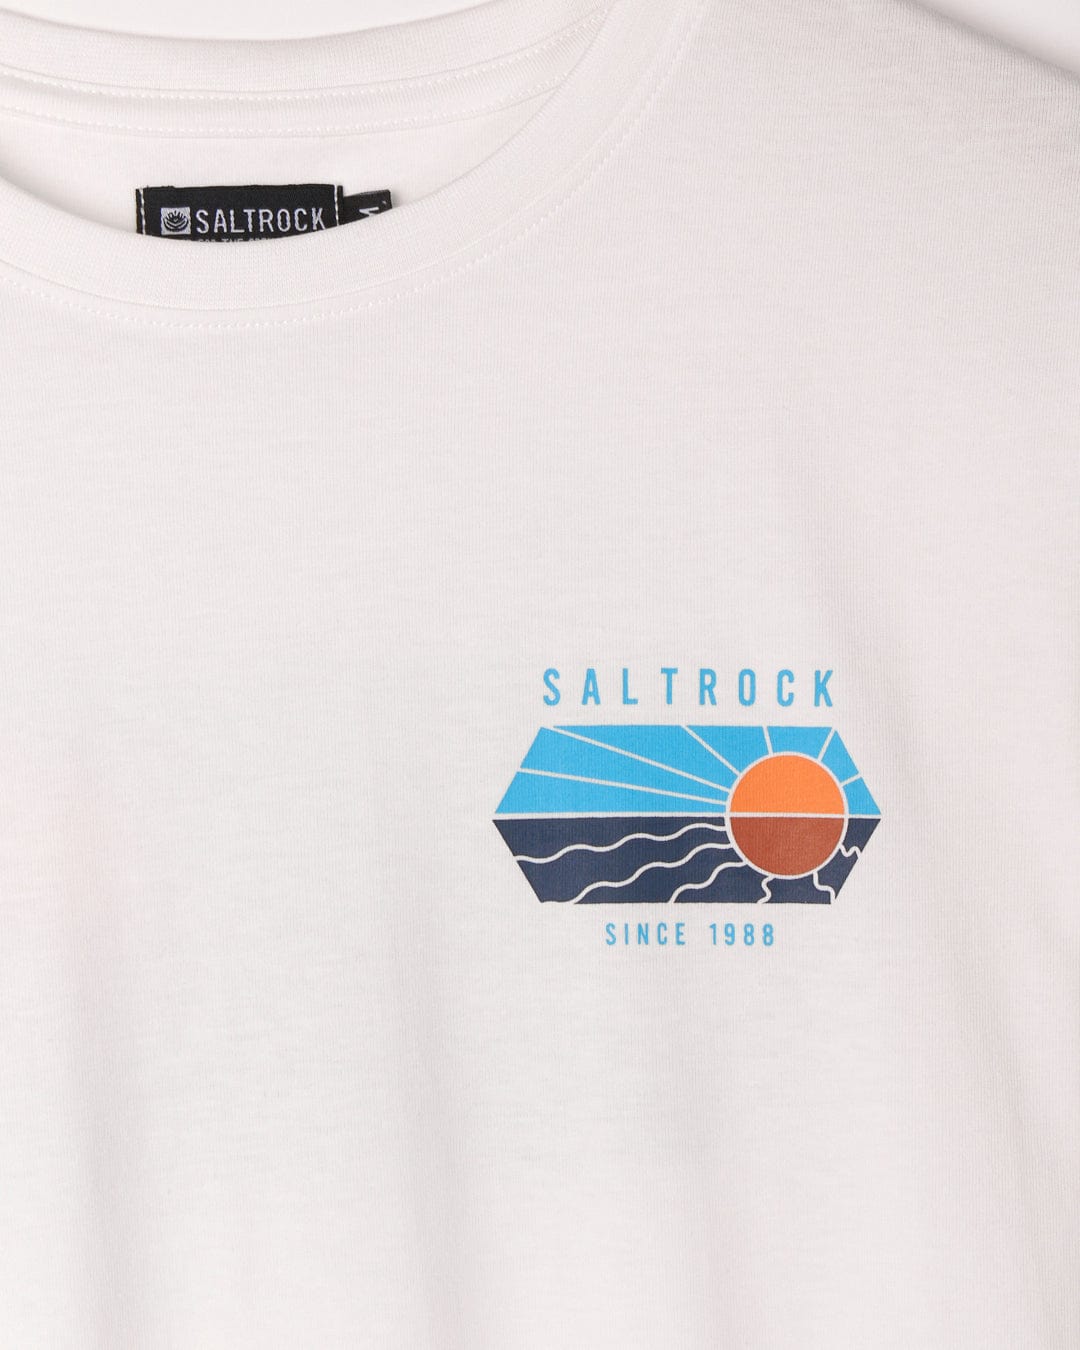 A soft white cotton Vantage Colour - Mens Short Sleeve T-Shirt featuring the Saltrock branding.